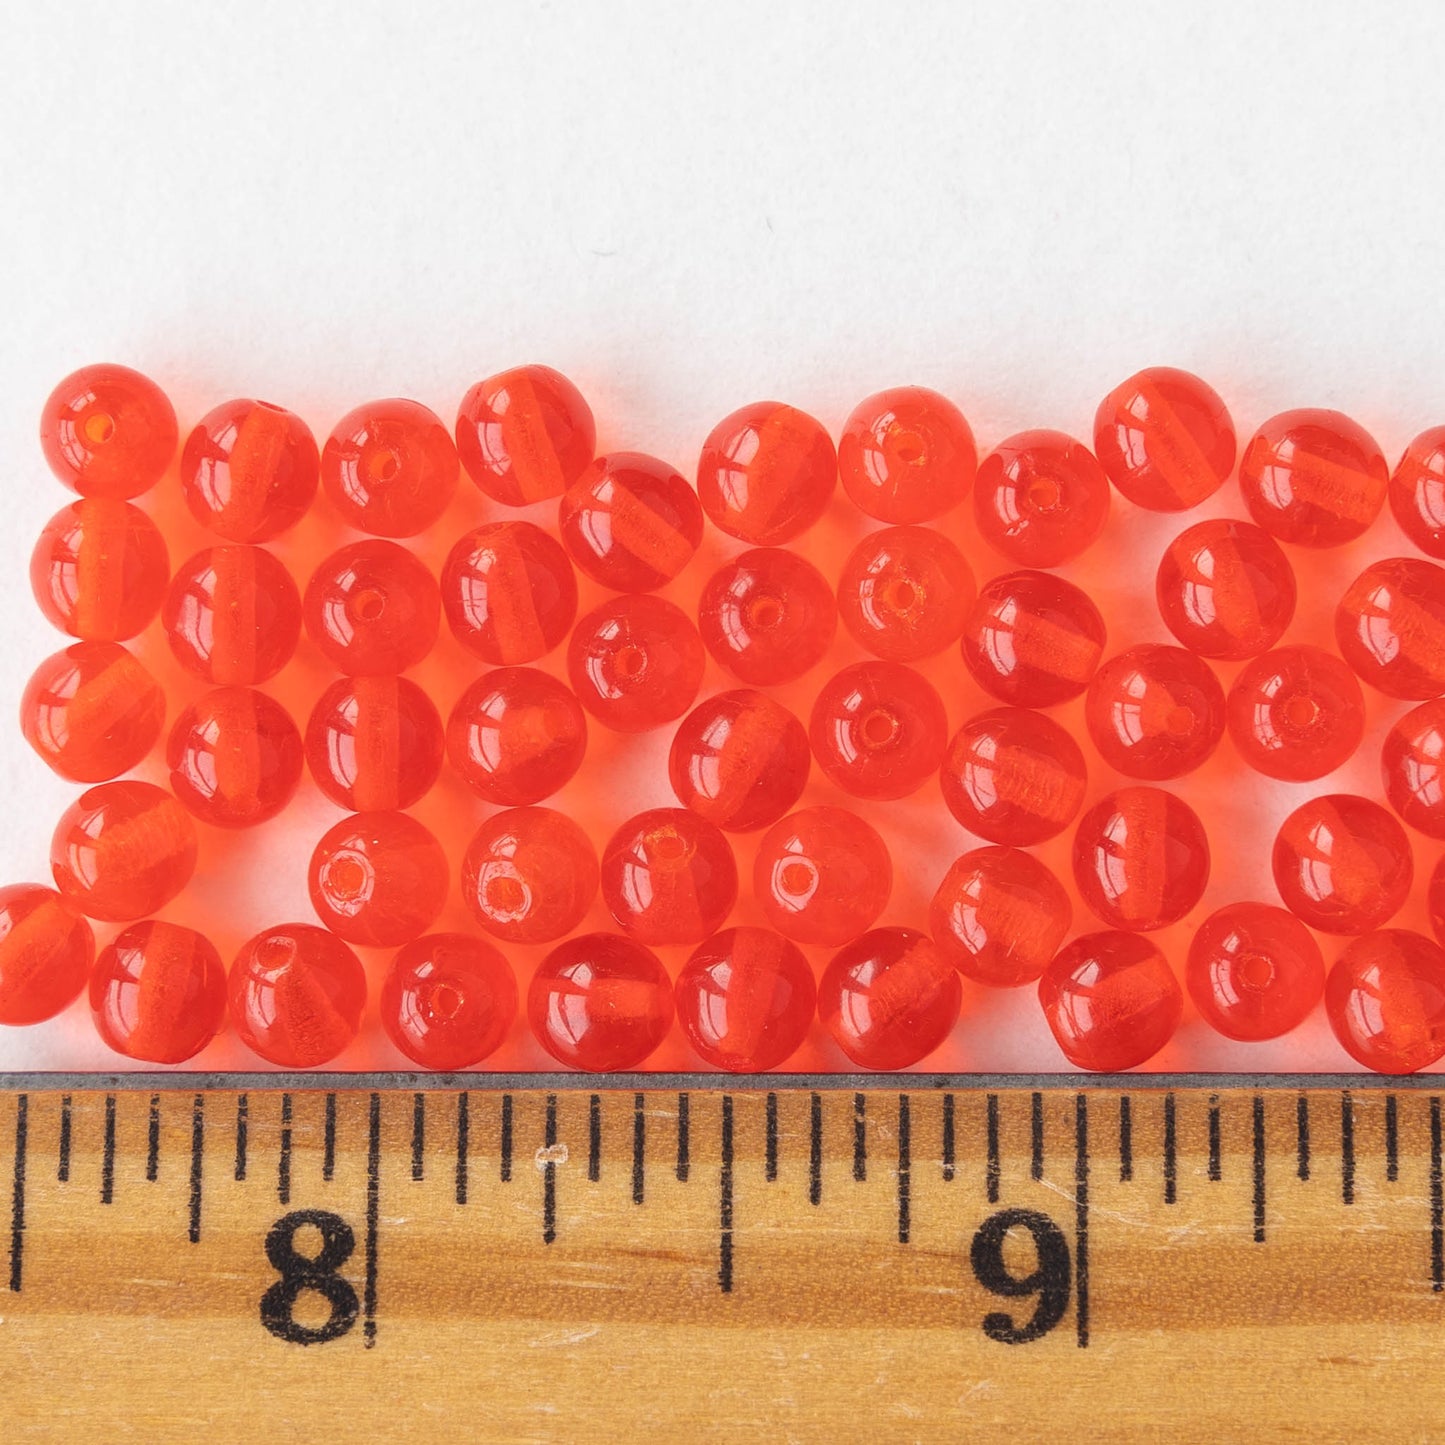 5mm Round Glass Beads - Transparent Dark Orange  - 100 Beads